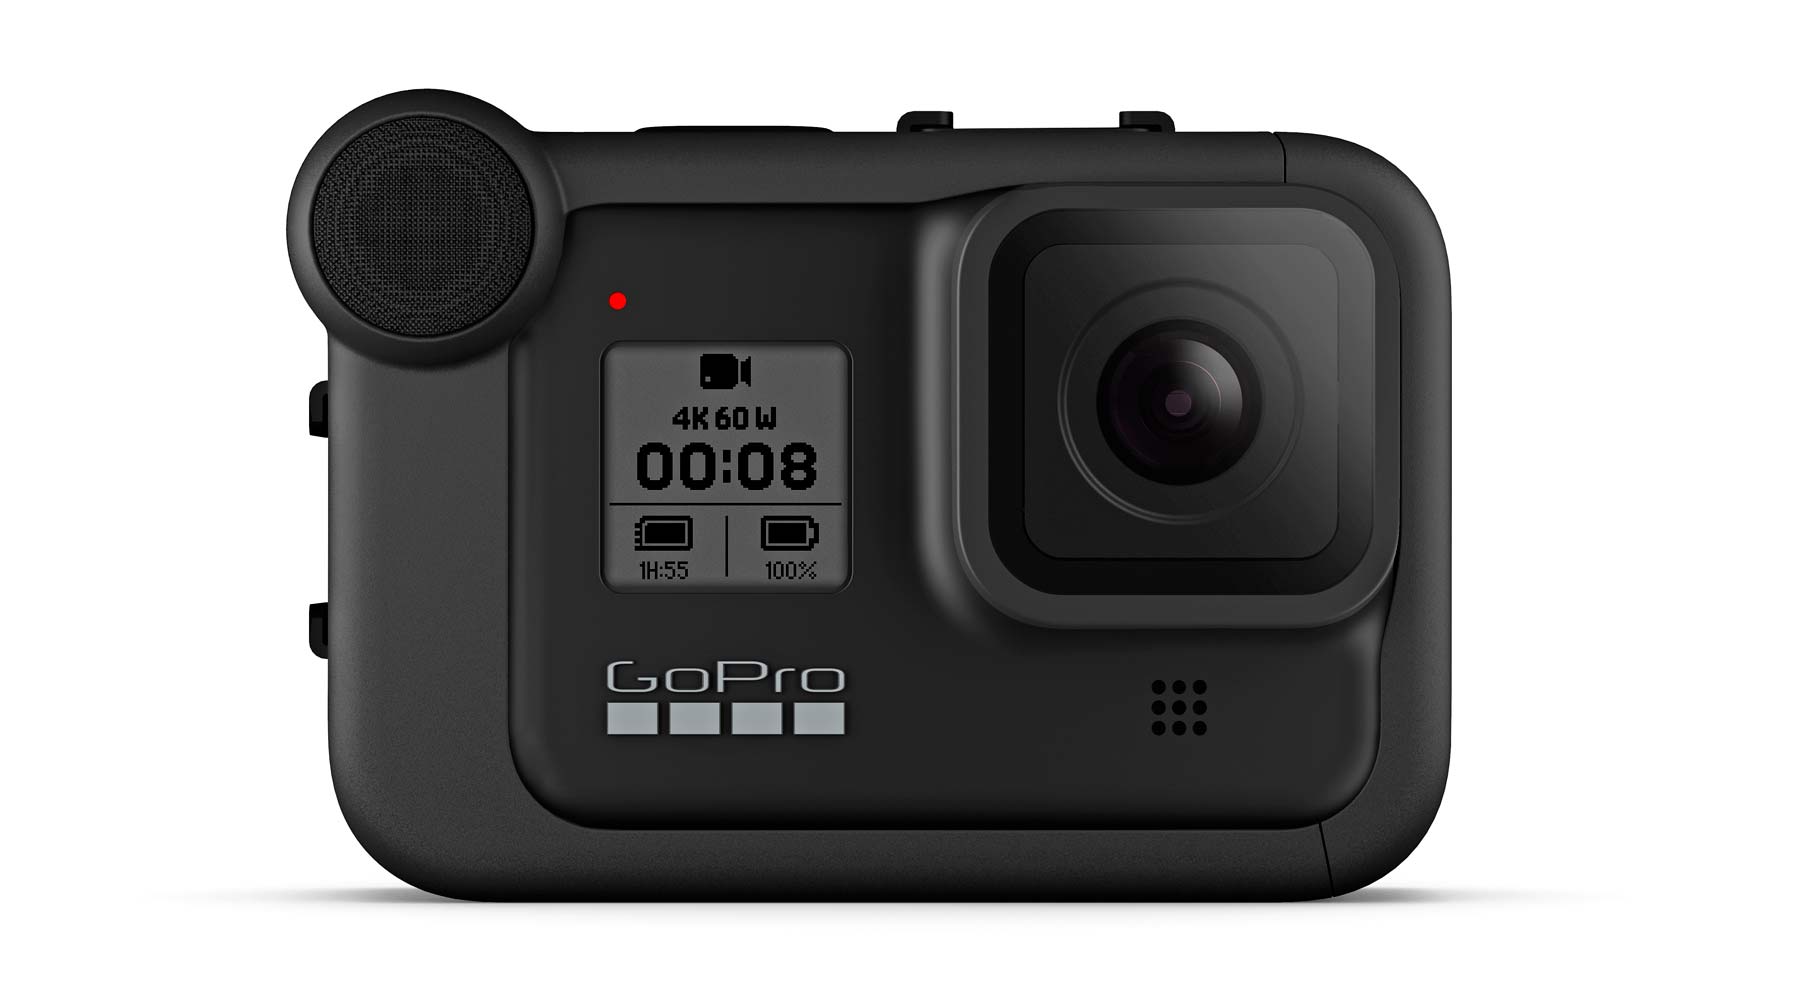 GoPro Hero 8 Black more powerful POV action camera Media Mod add-on